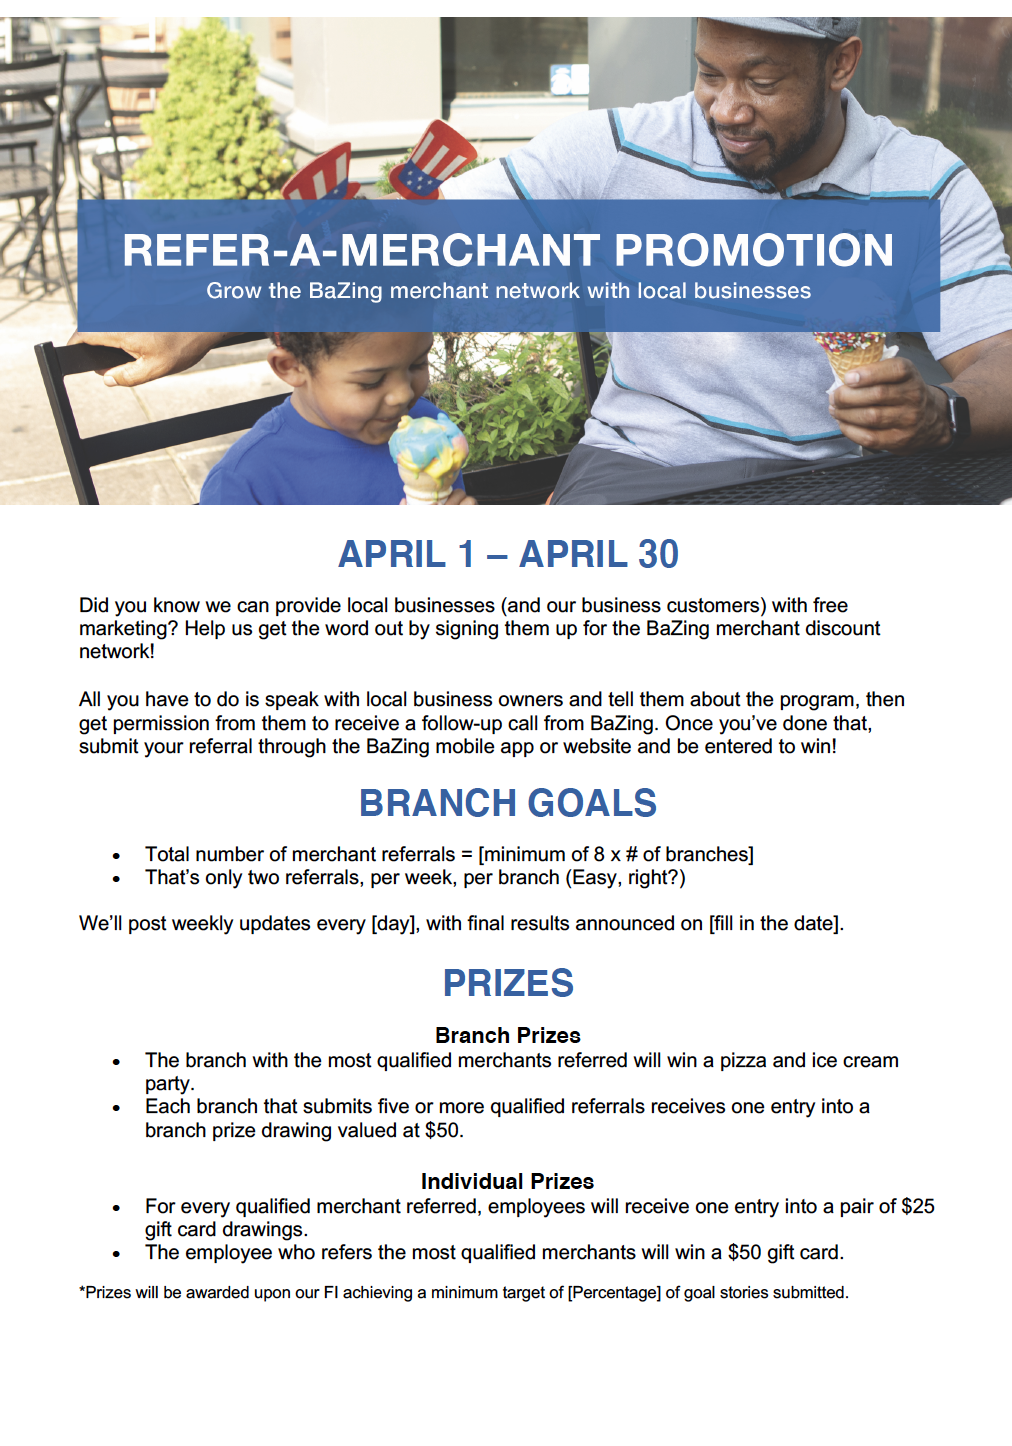 Refer-A-Merchant Promotion